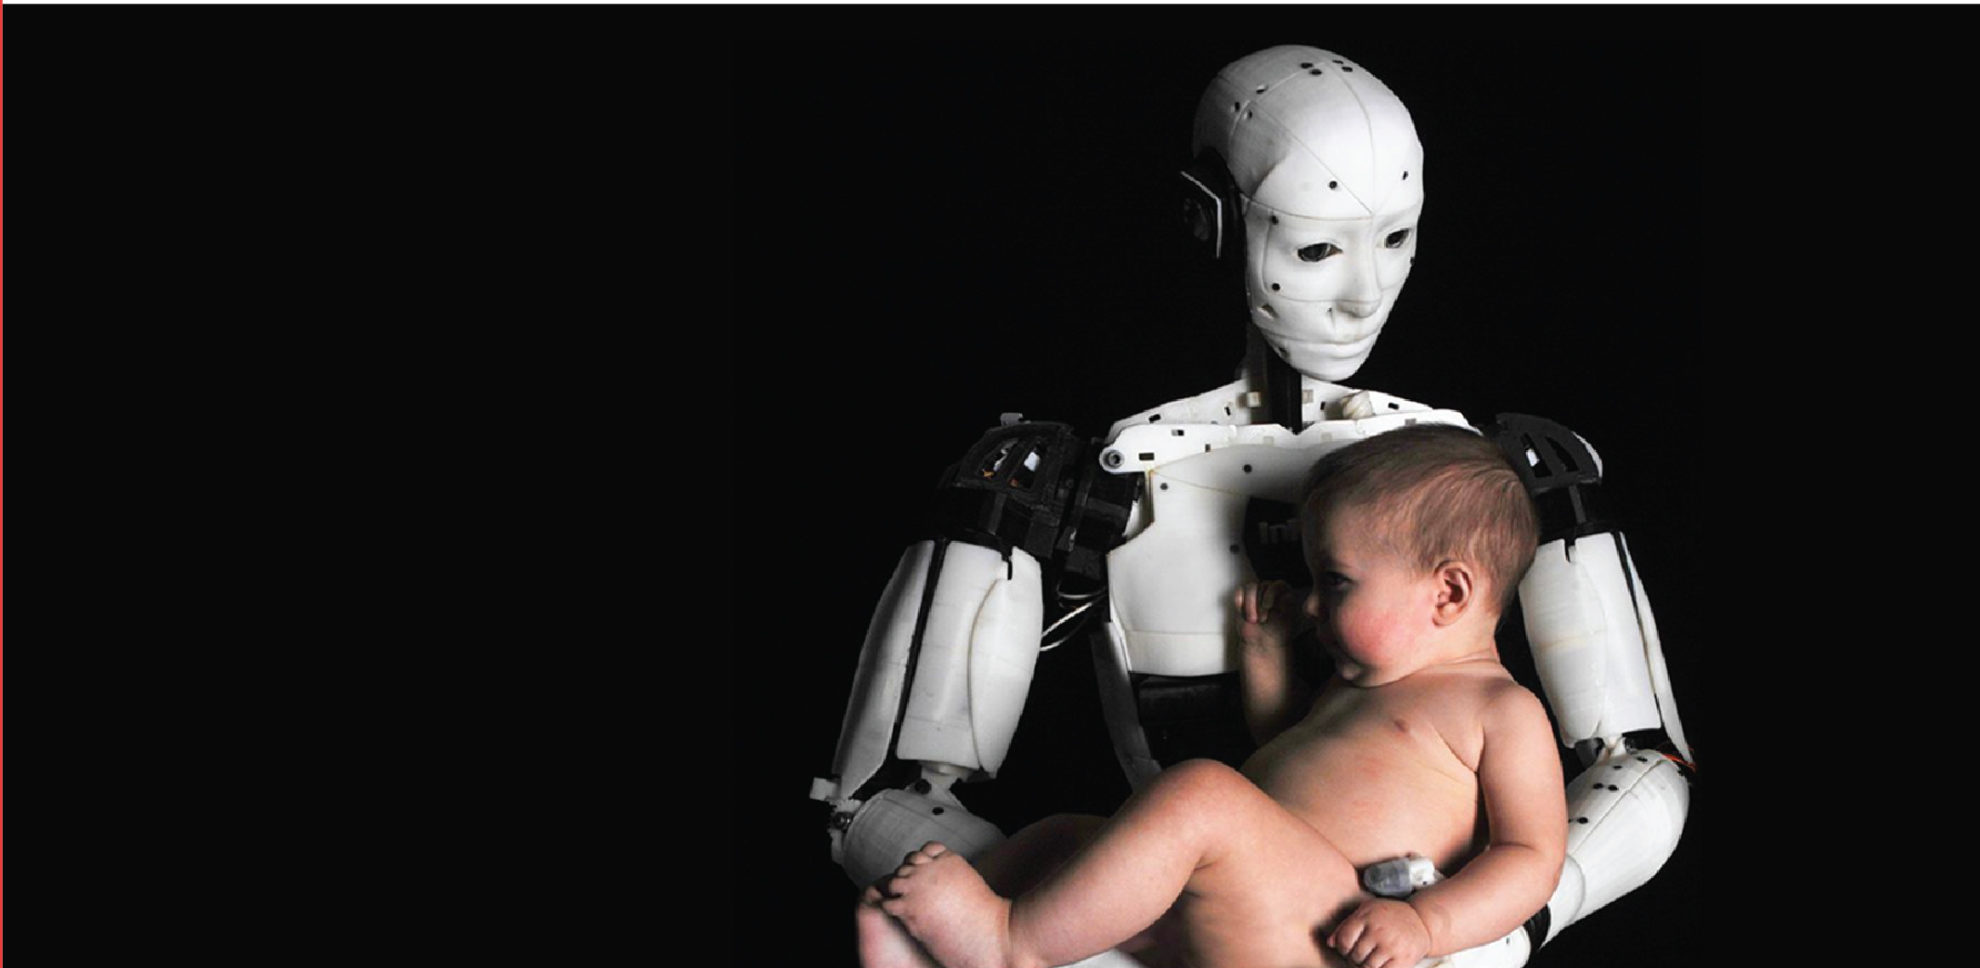 Digital Deep Dives Nº3 - Artificial Marketing: The Robot Lov